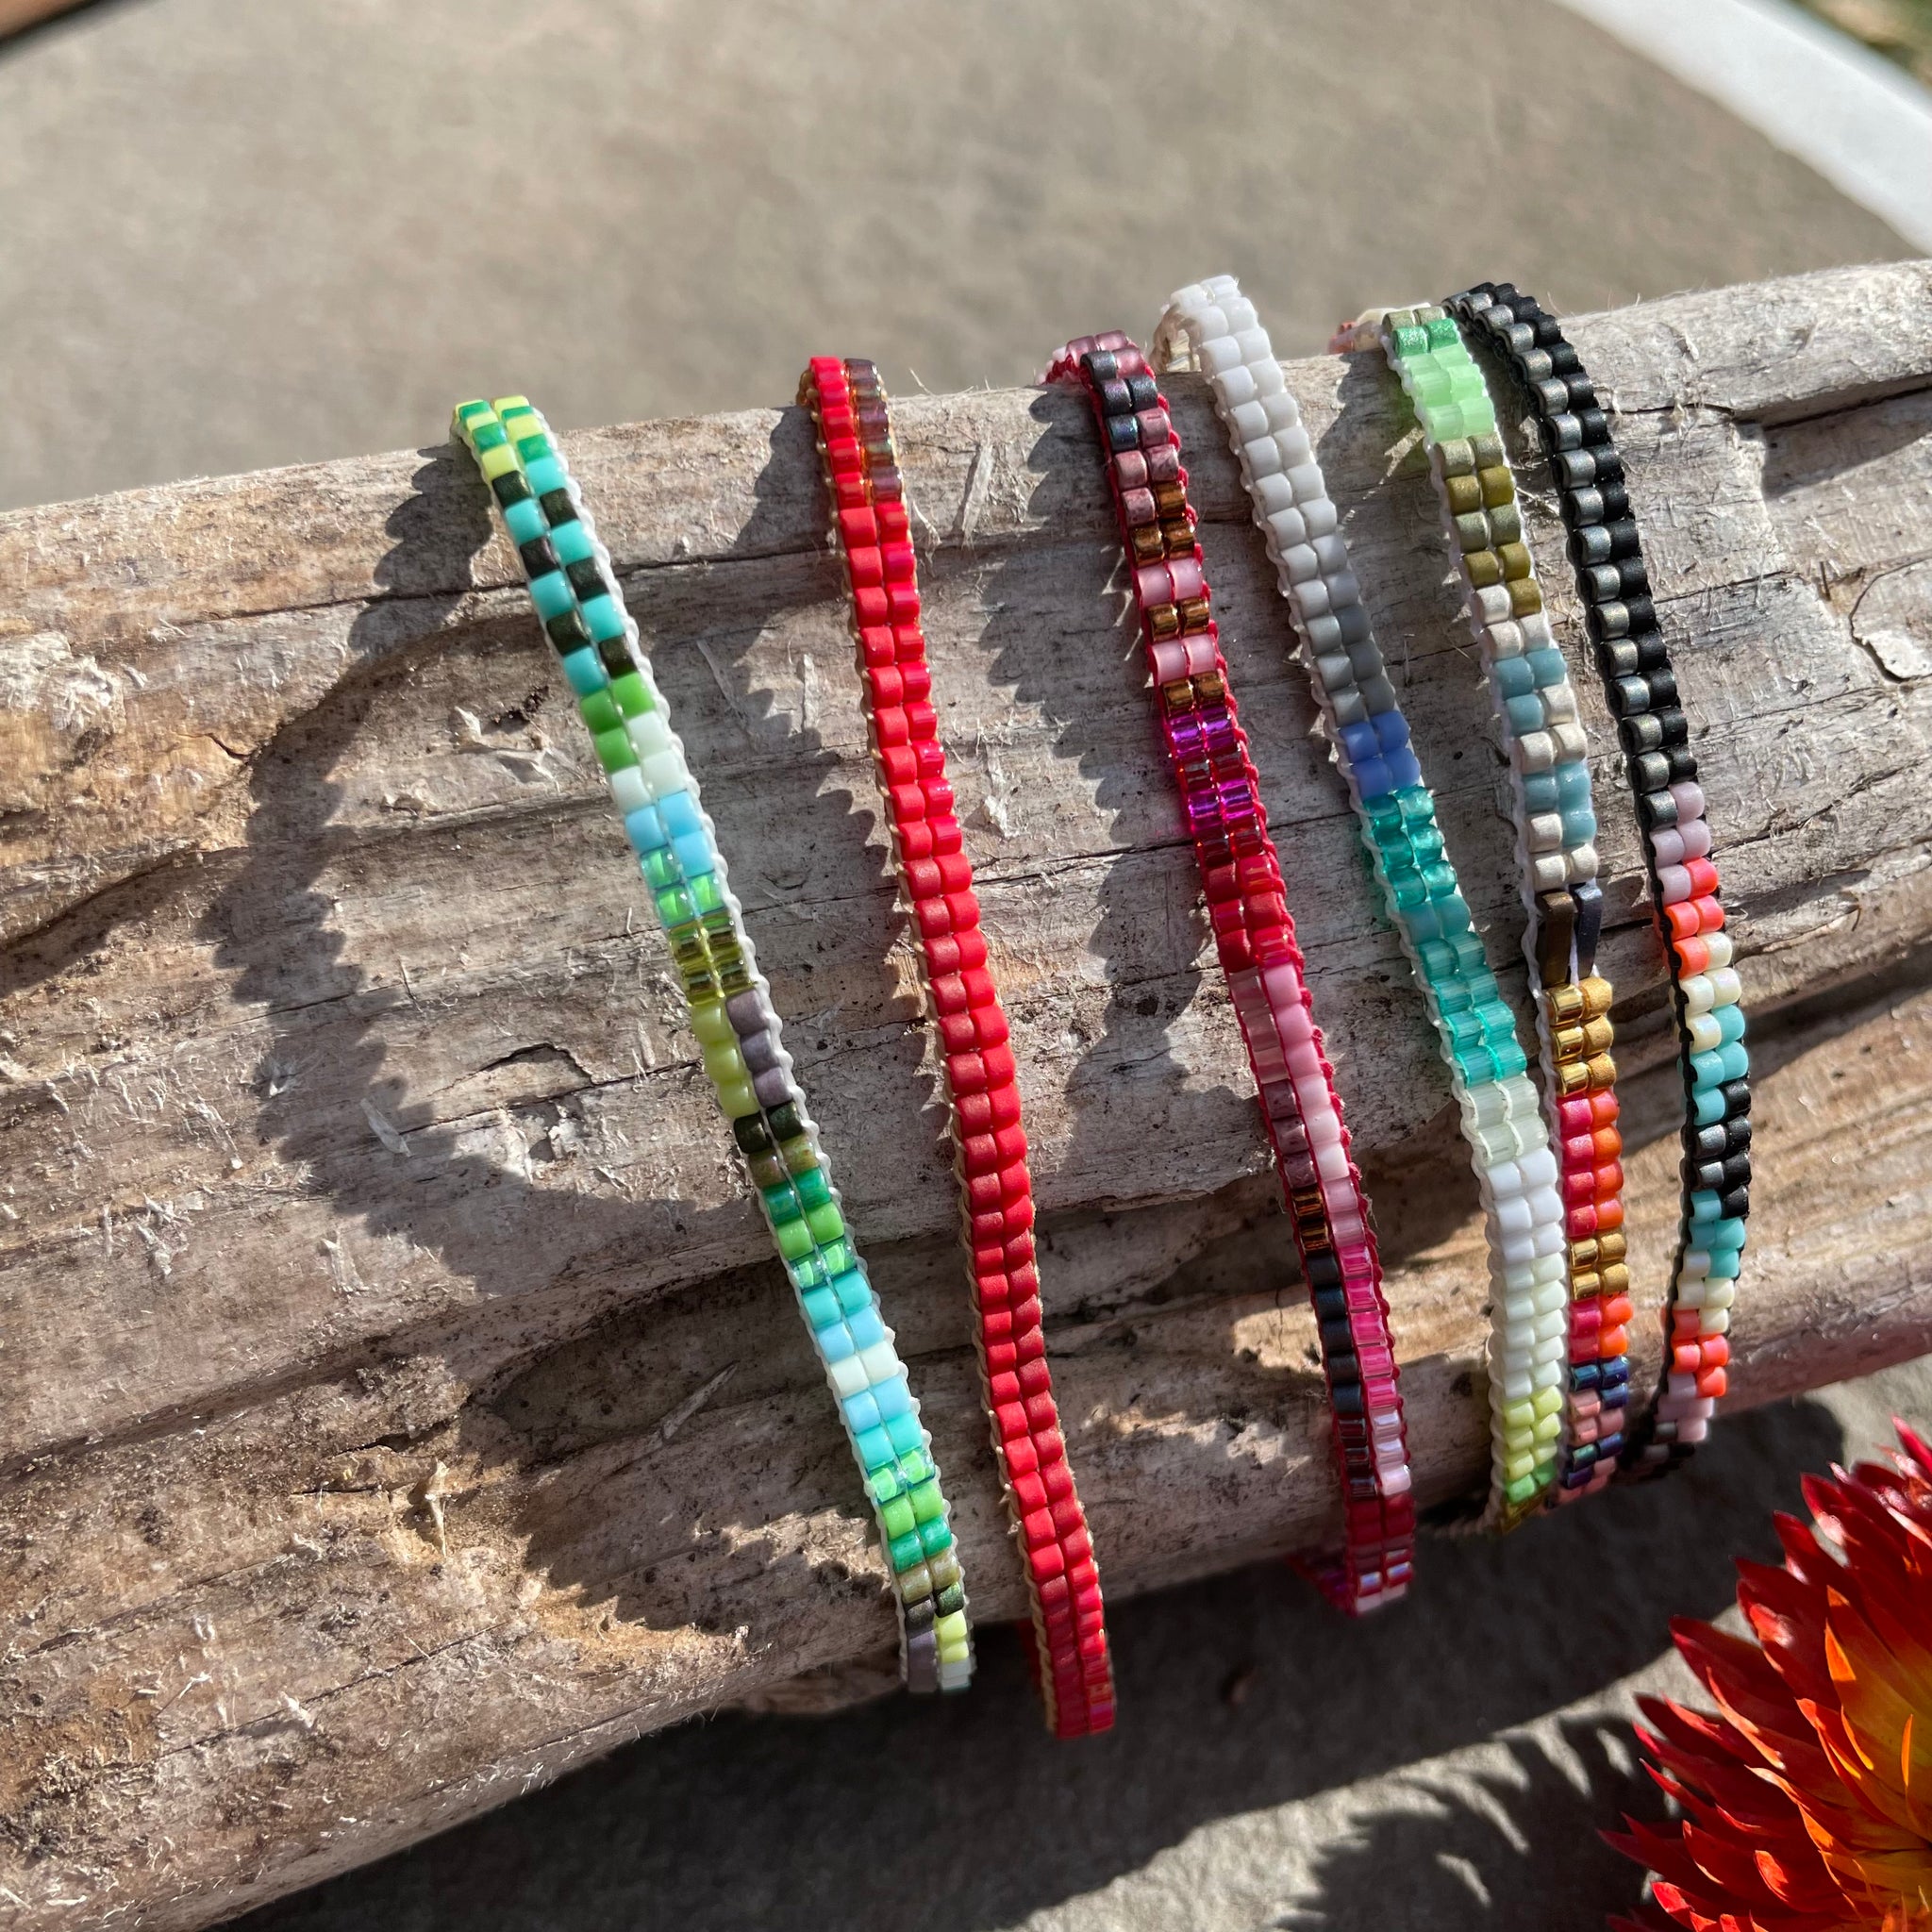 Rainbow Bead Crochet Bracelet - Susan Jefferson Jewelry Designs